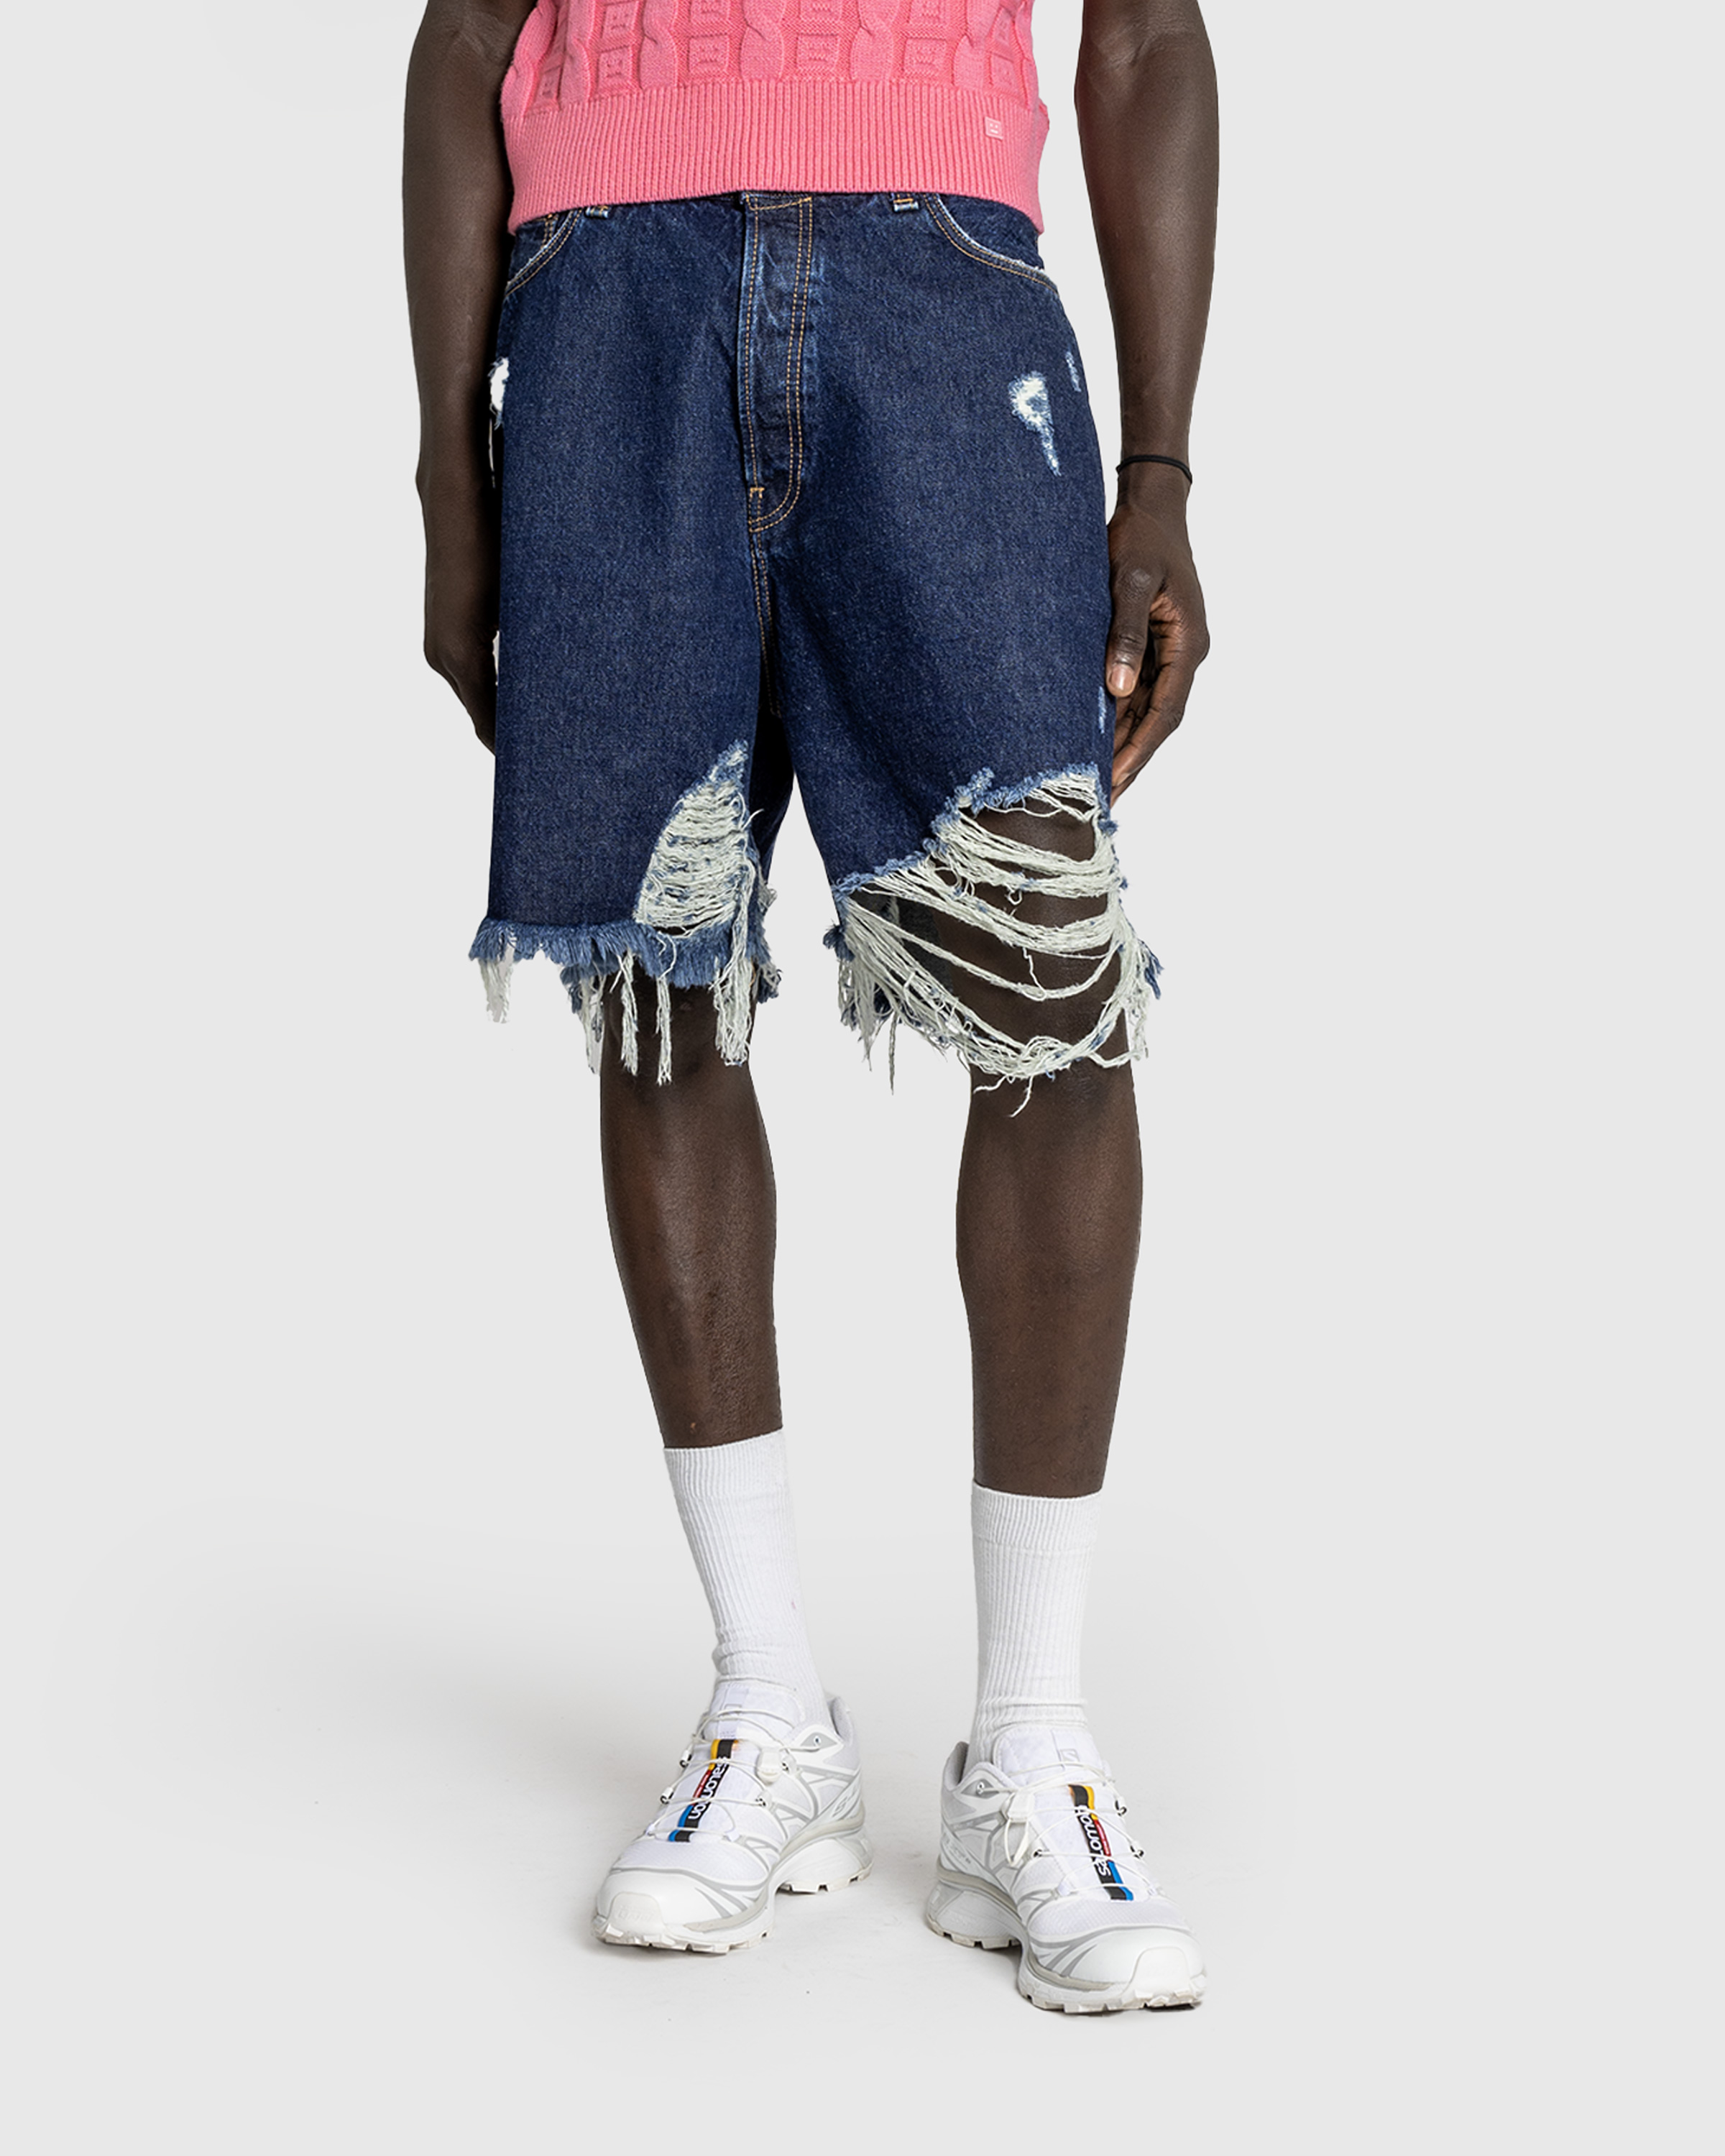 Acne Studios – Distressed Denim Shorts Mid Blue - Cargo Shorts - Blue - Image 2